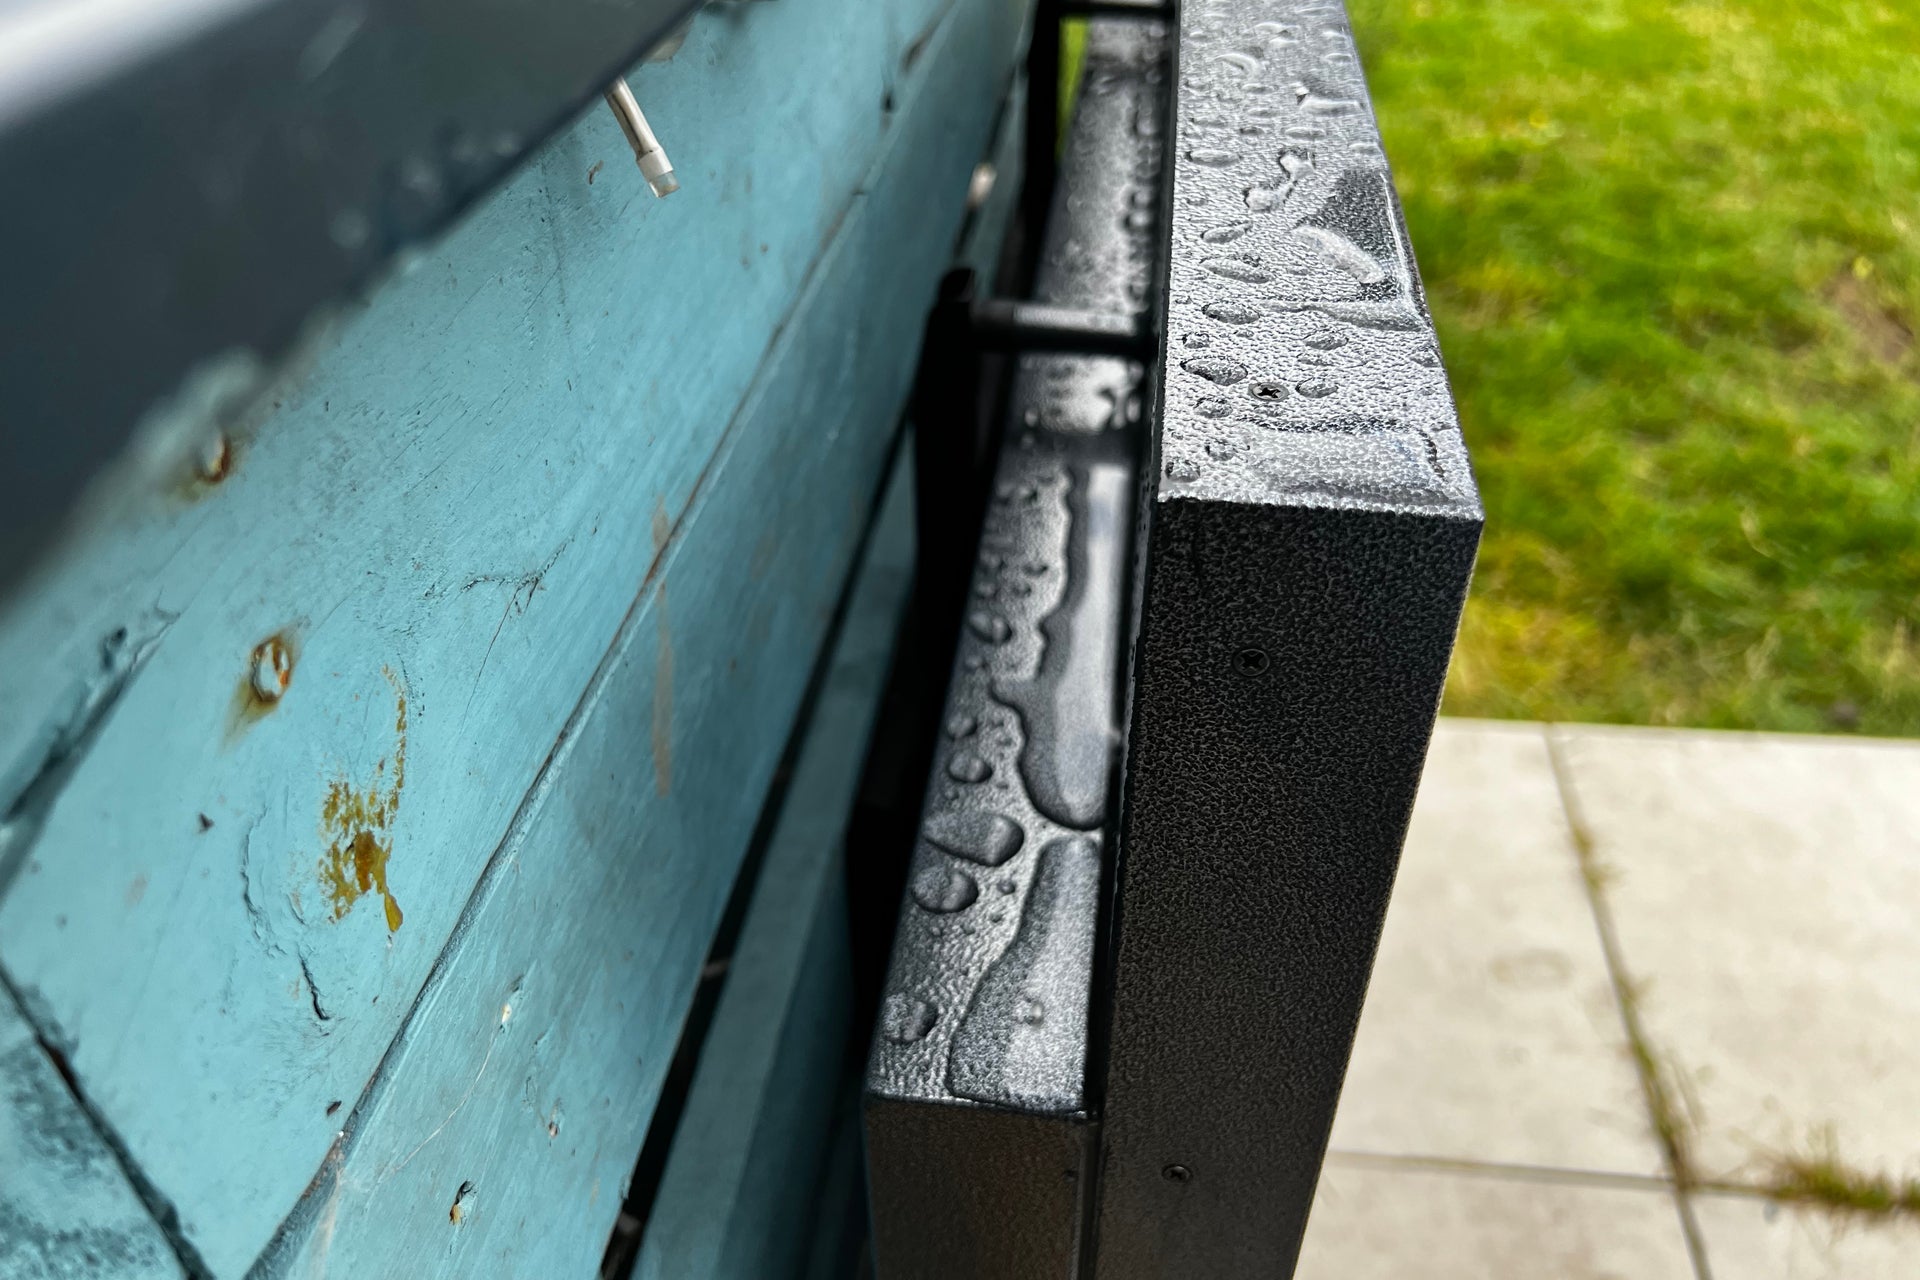 Sylvox 43-inch Deck Pro Outdoor TV wet after rain